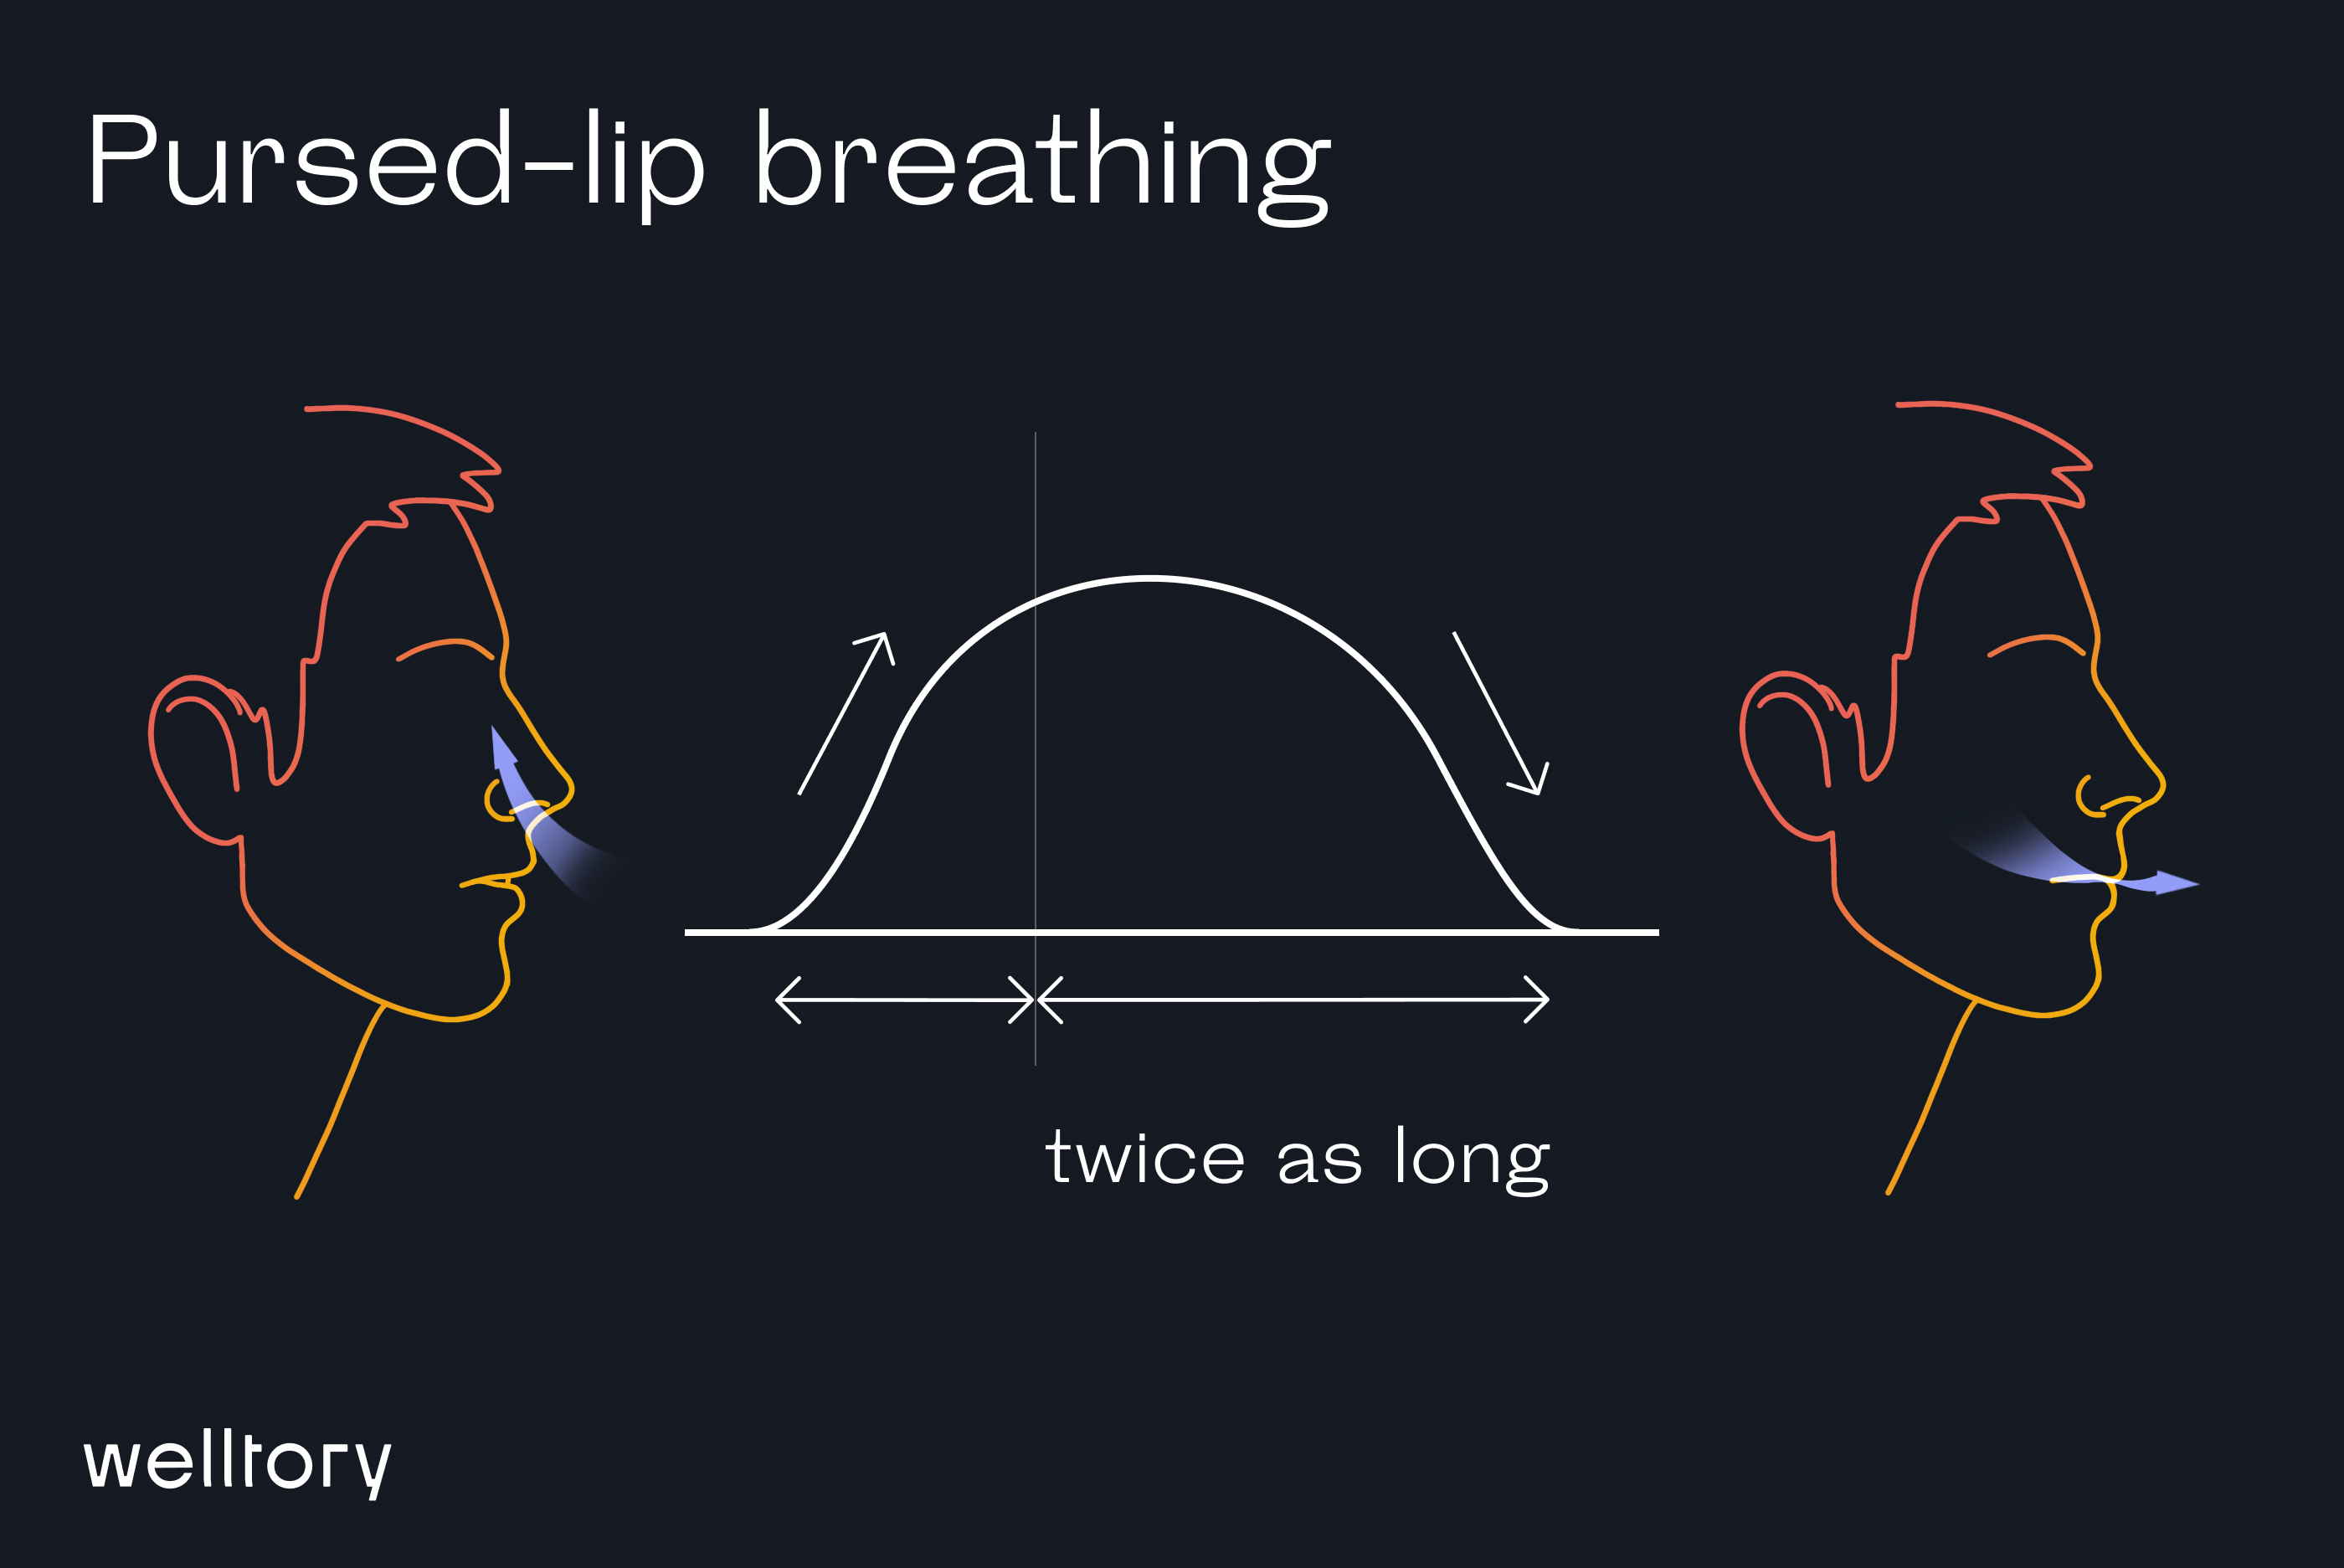 Pursed-lip breathing